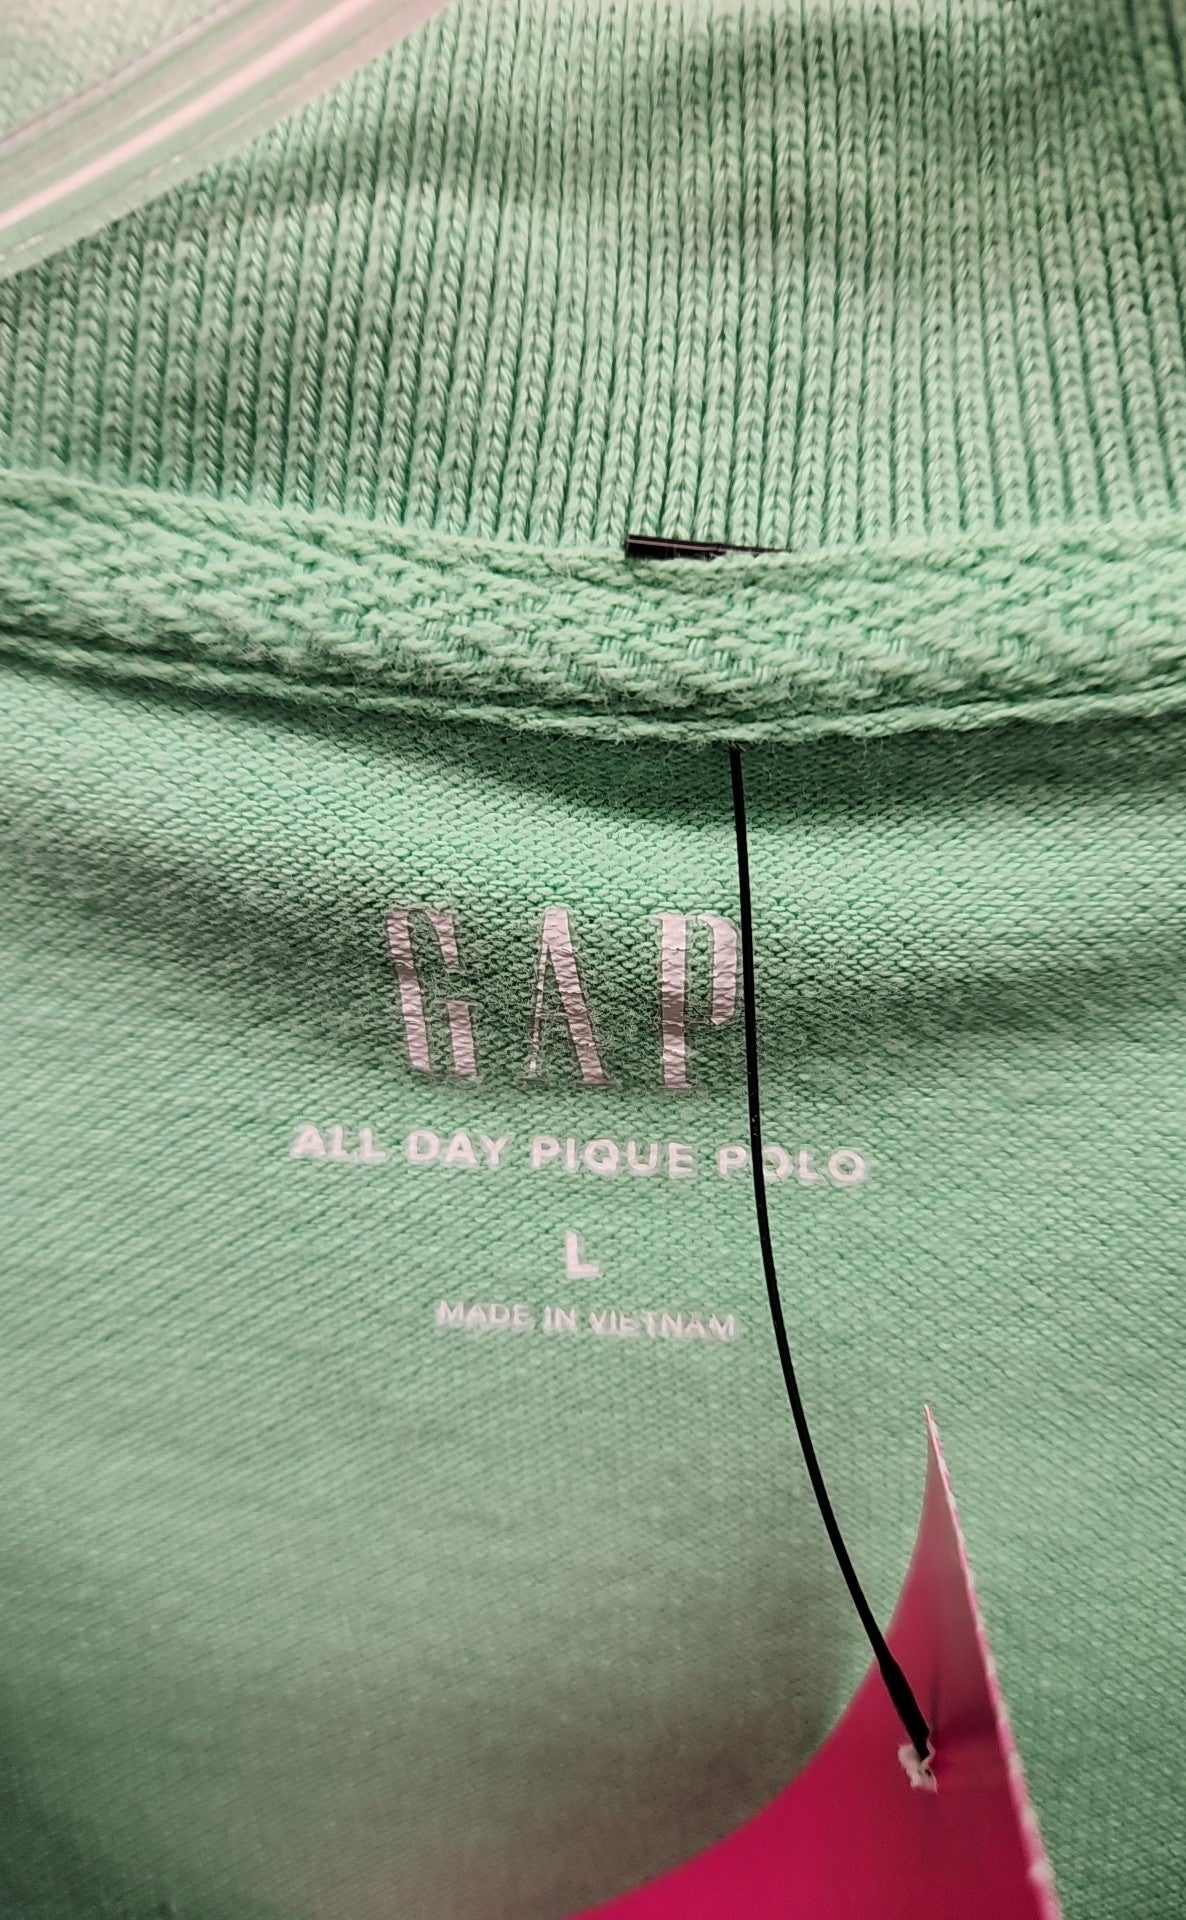 Gap Men's Size L Green Shirt